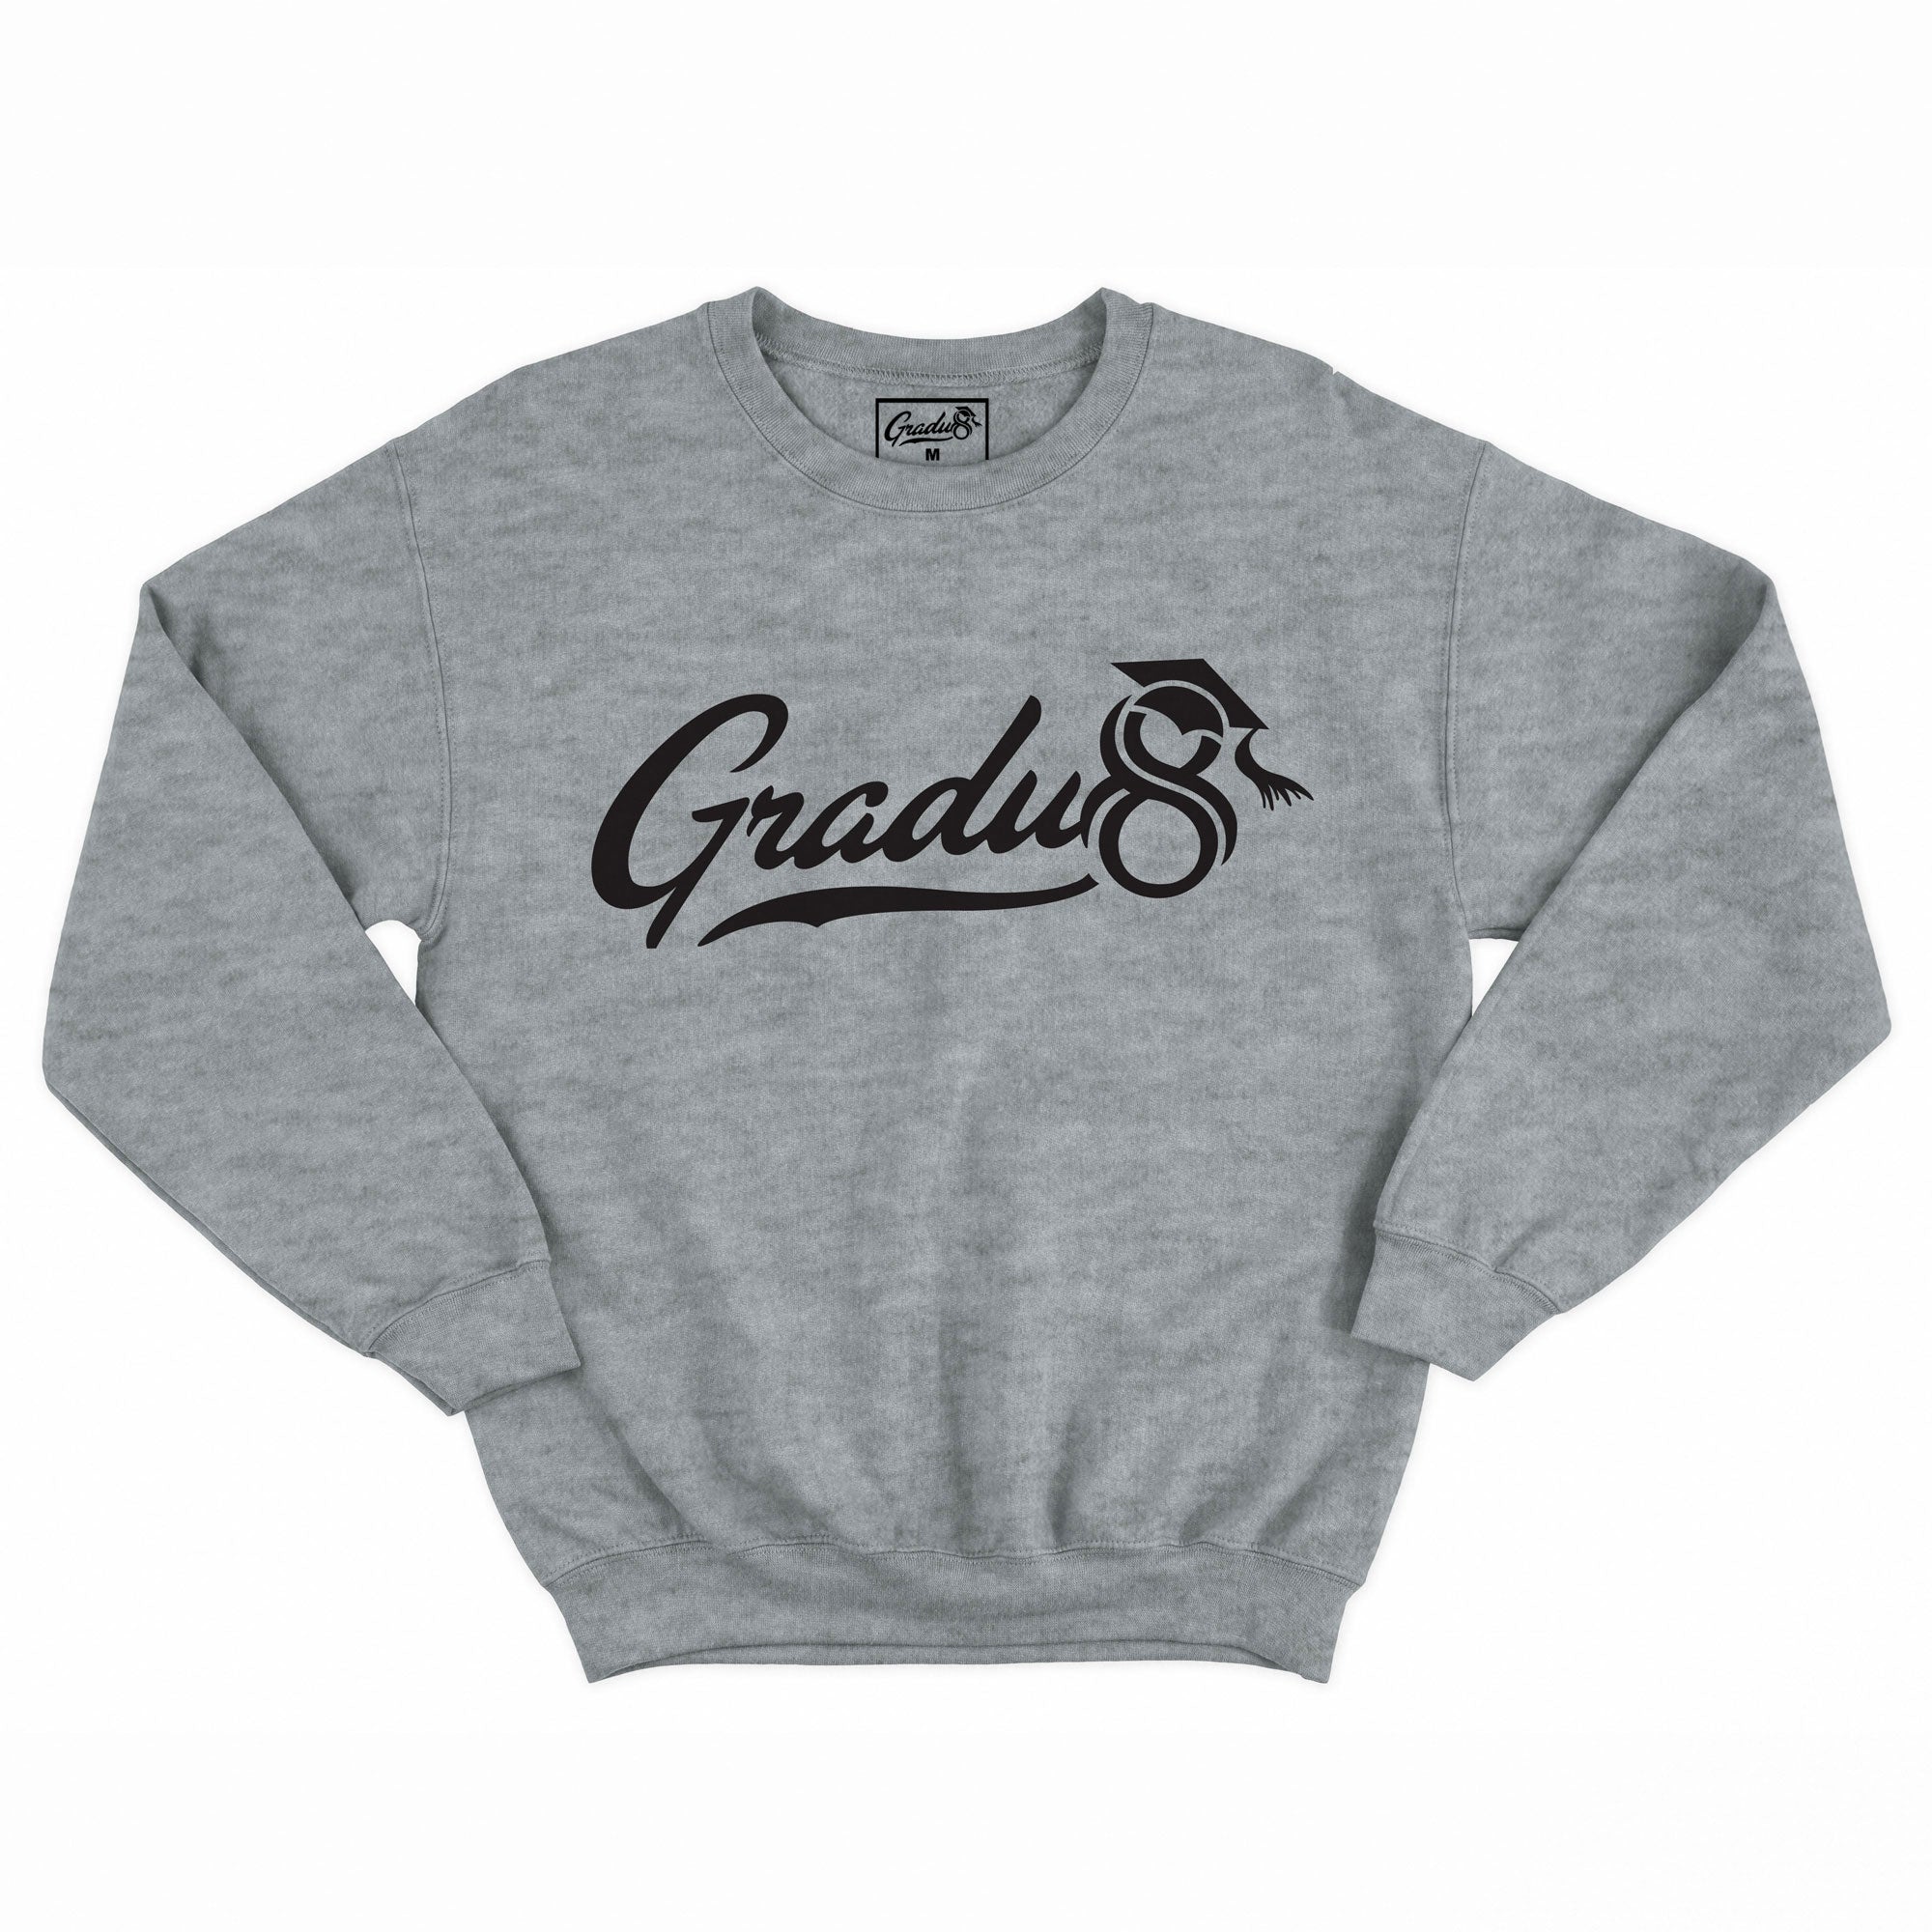 Official Gradu8 Premium Sweatshirt - Carbon Grey